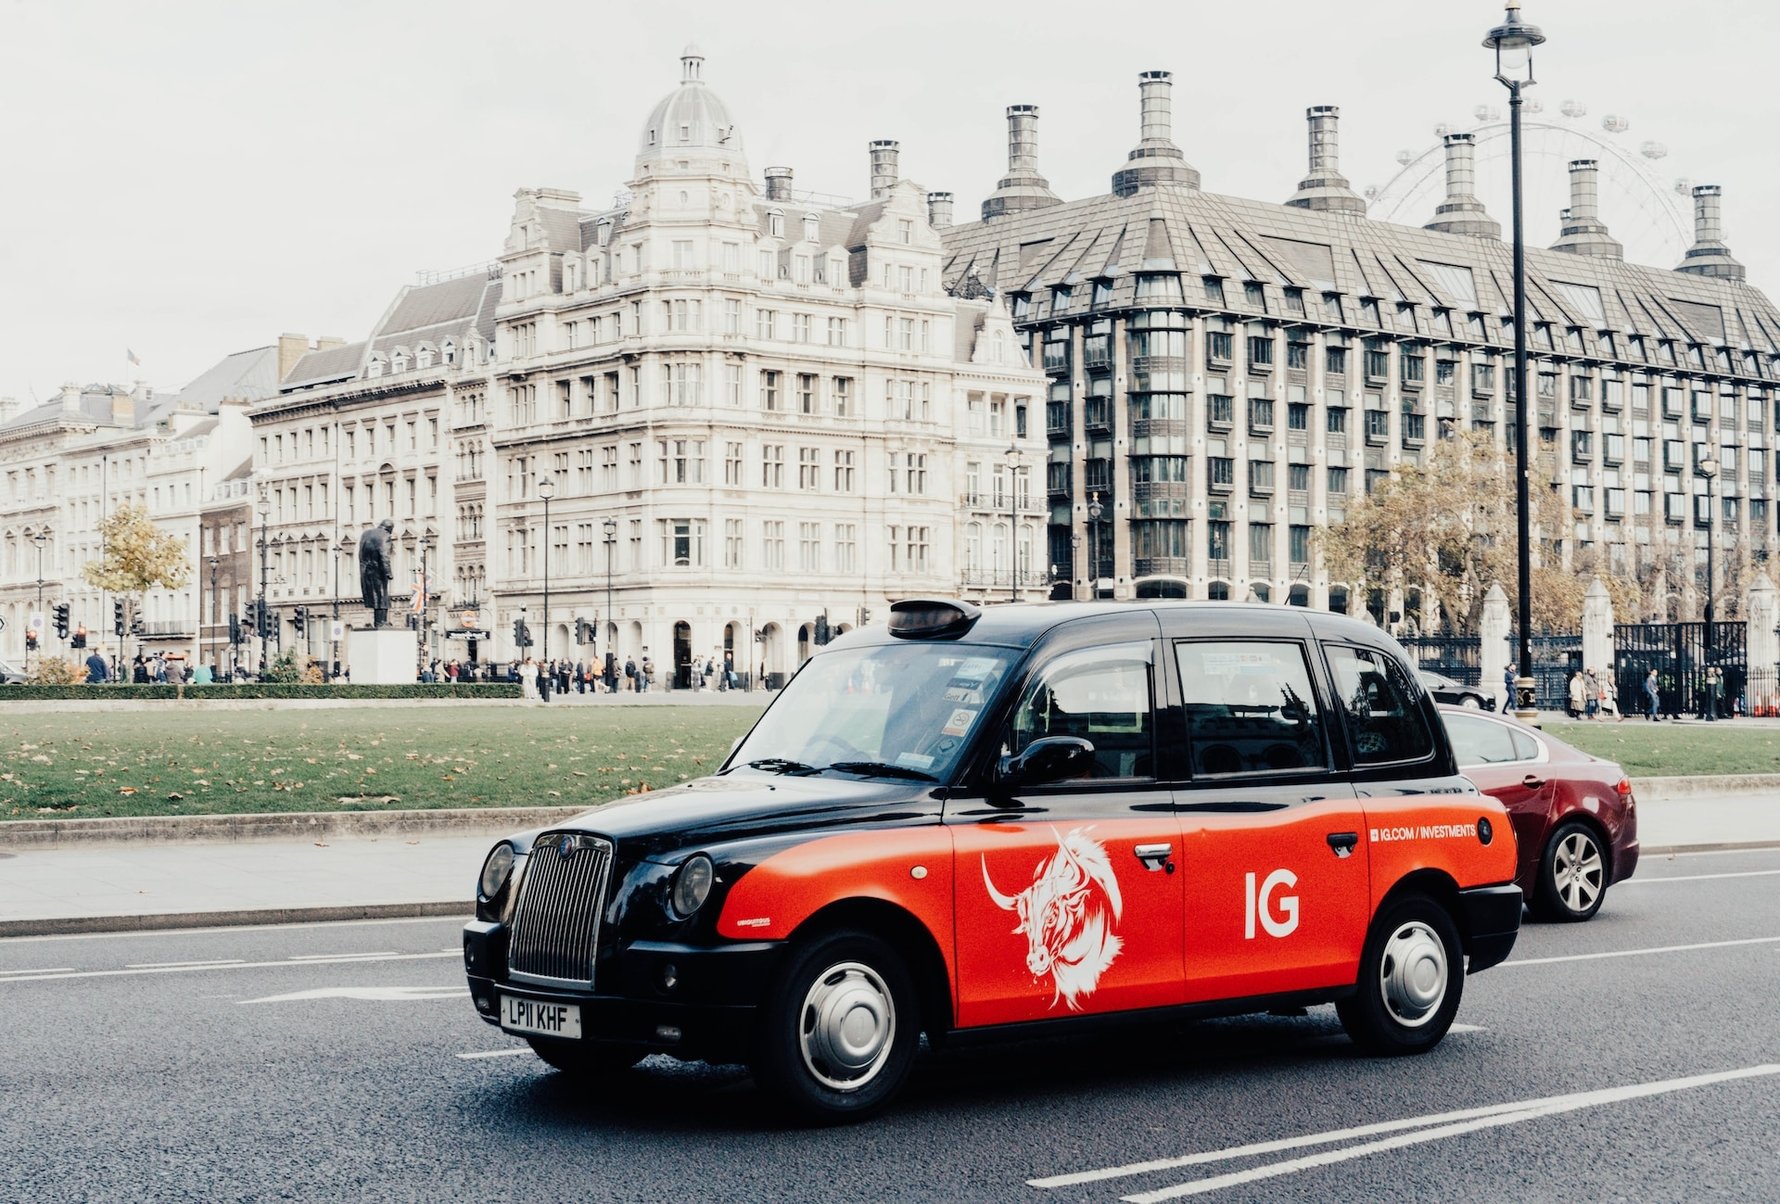 black cab on london street